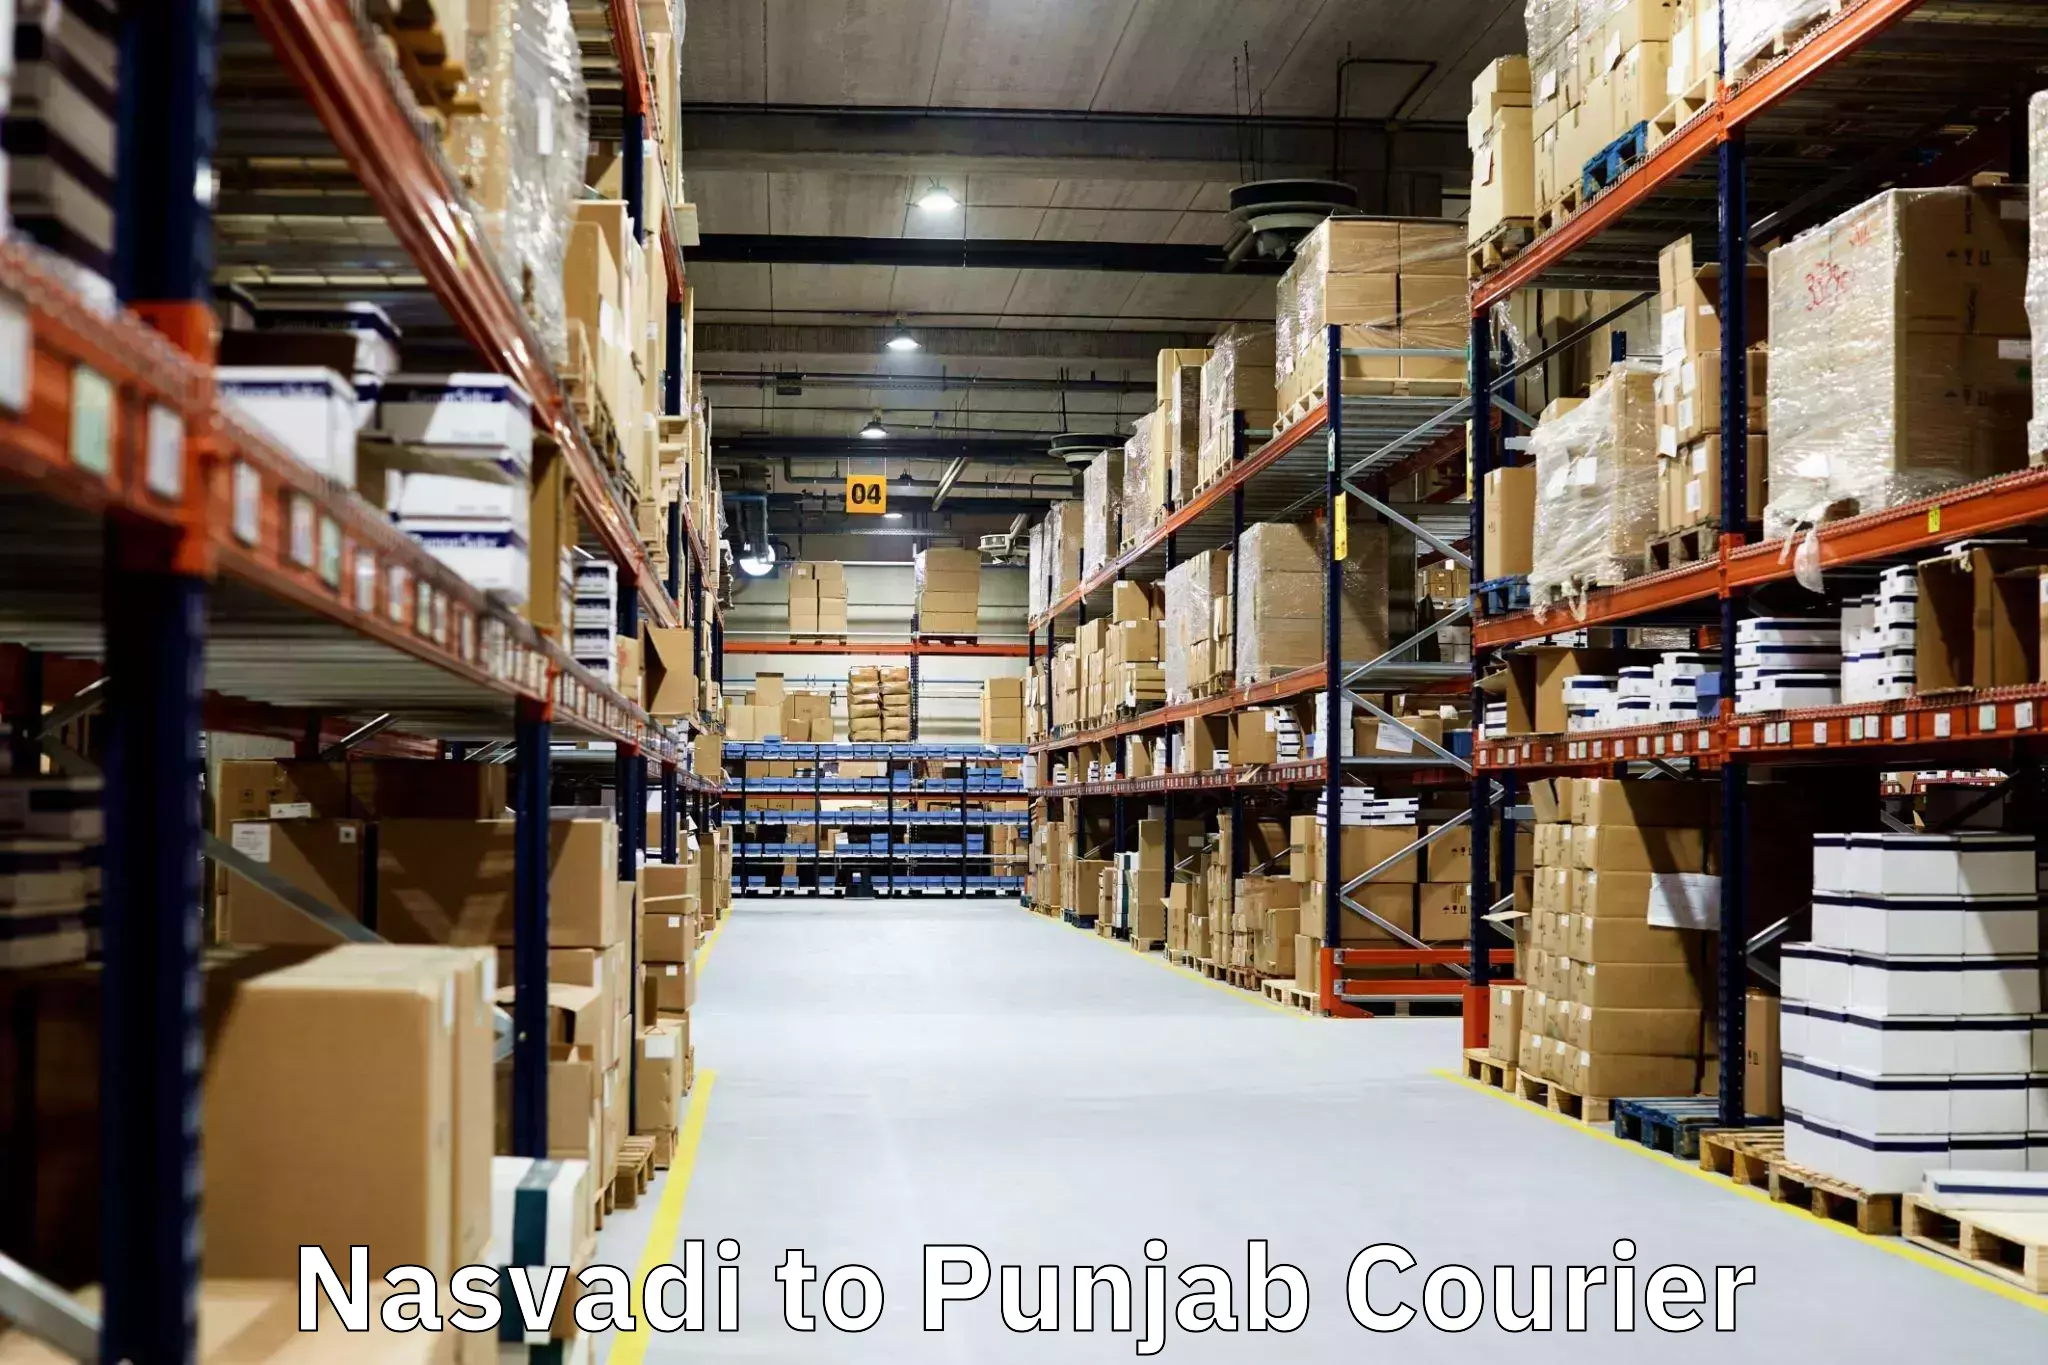 Moving and packing experts Nasvadi to Punjab